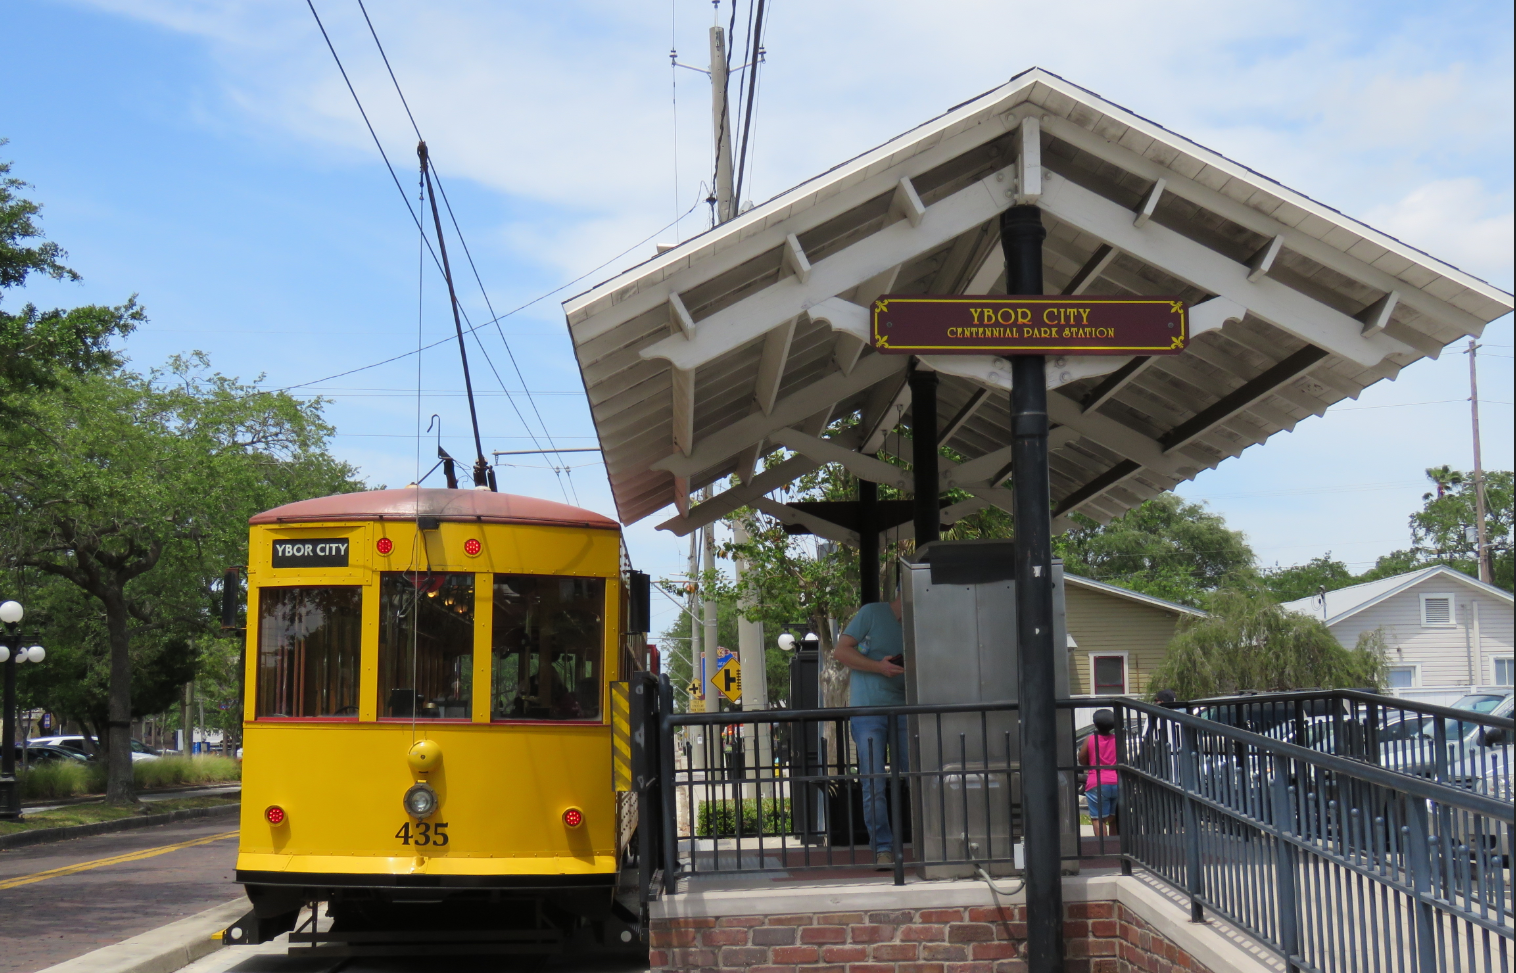 Tram station, Ybor City, Tampa